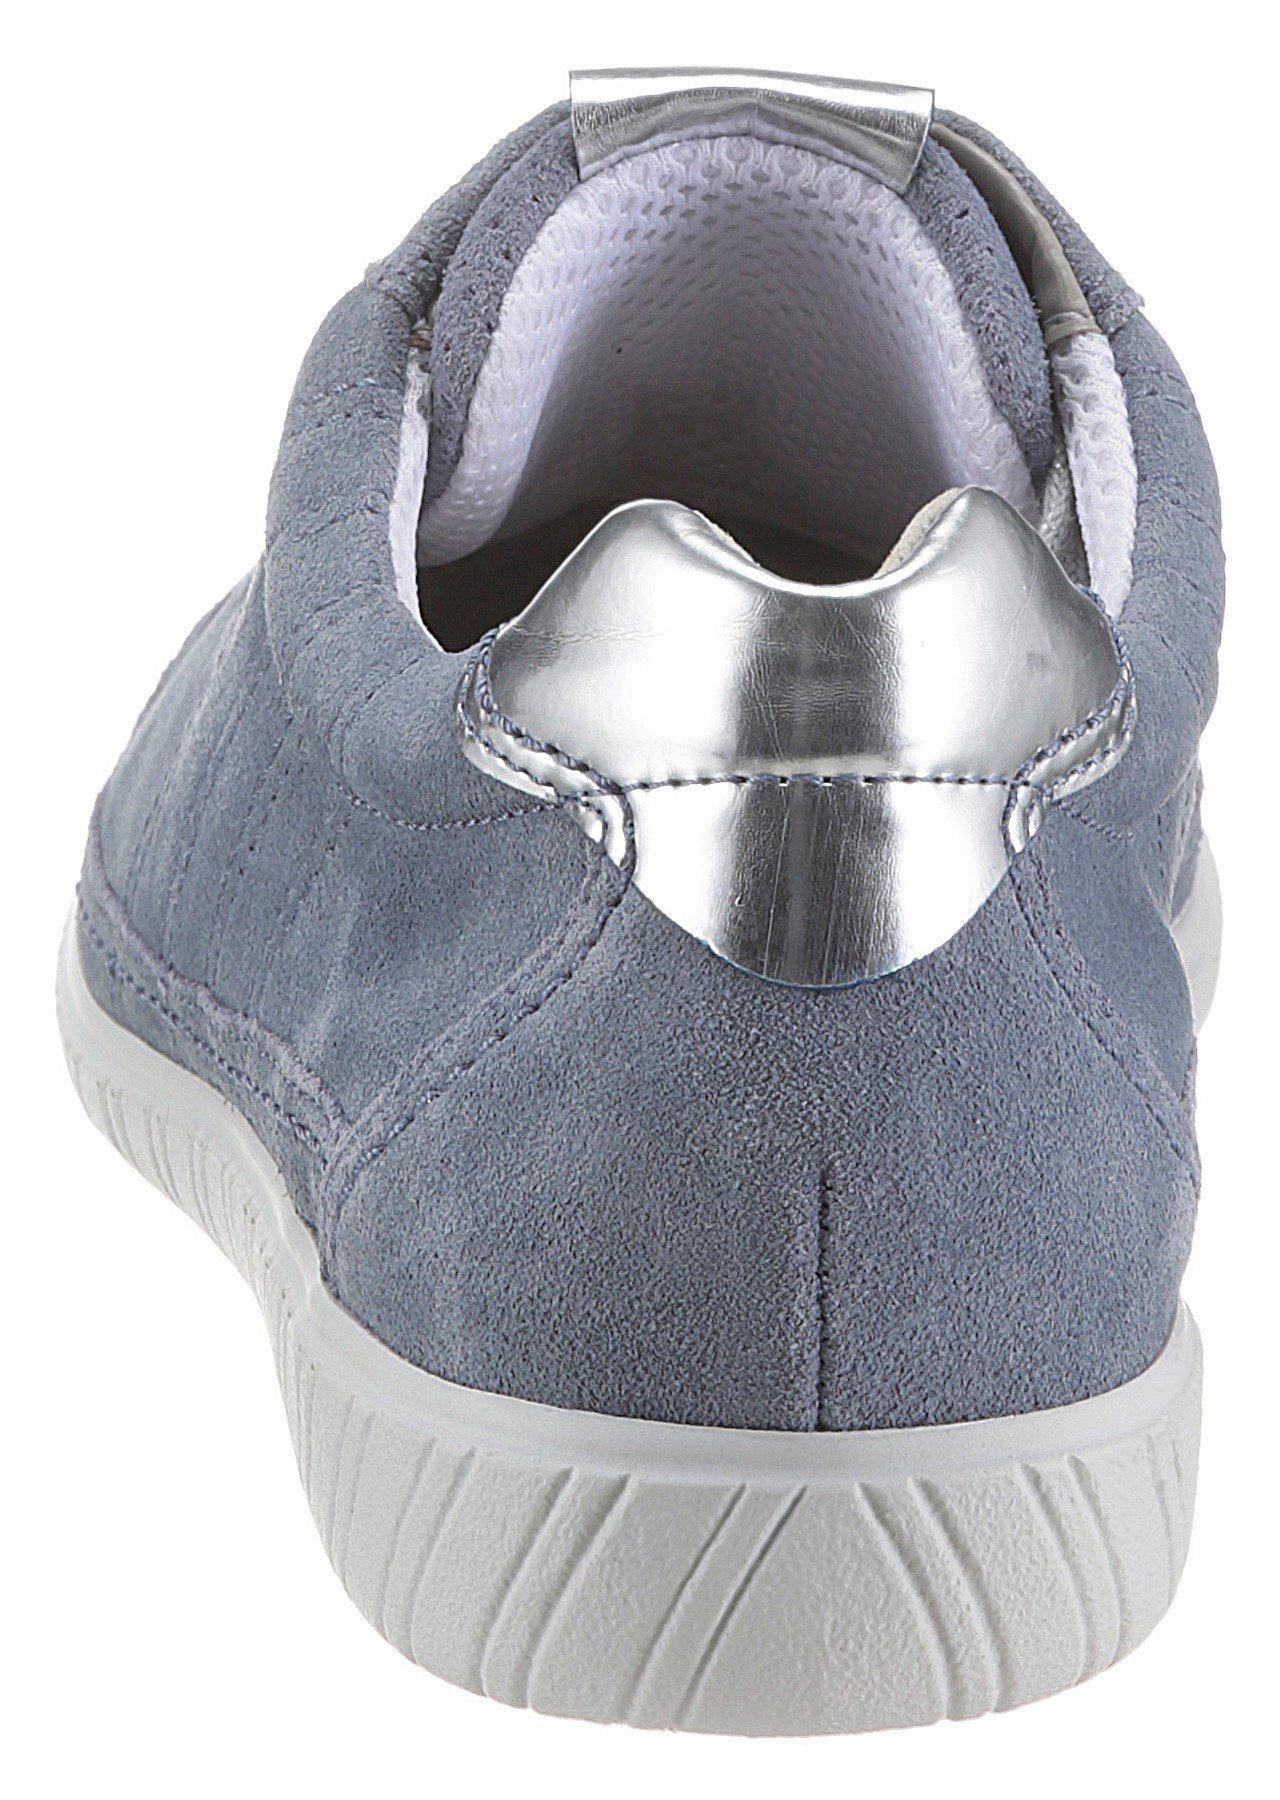 YORK Gabor Sneaker hellblau-silberfarben Look sportivem in